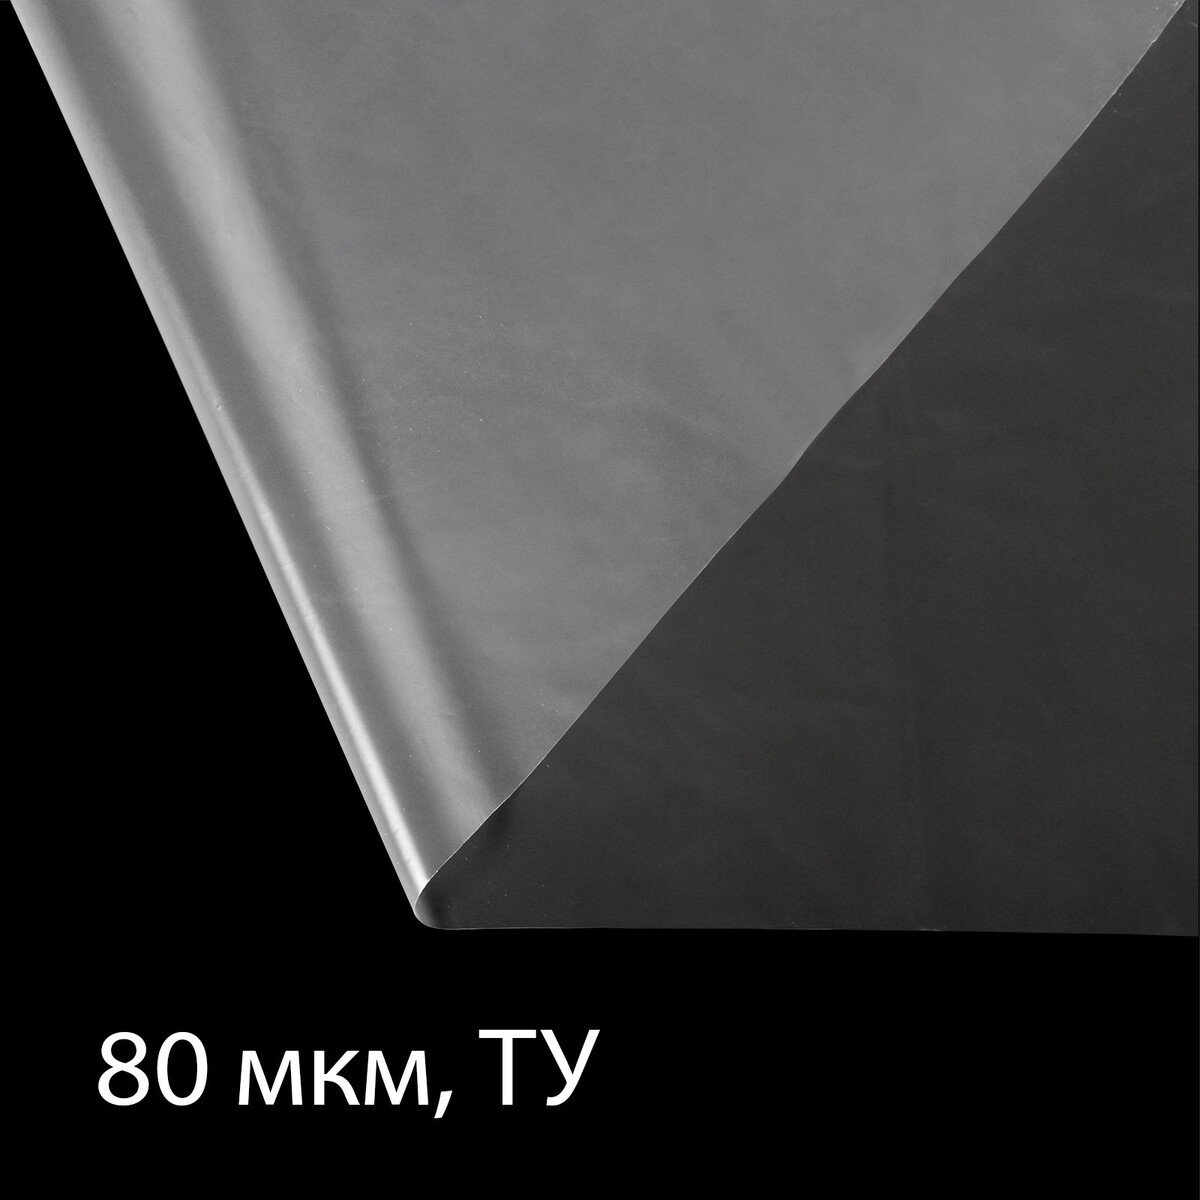 Пленка полиэтиленовая 80 мкм, прозрачная, длина 10 м, ширина 3 м, рукав (1.5 м × 2), эконом 50% пленка полиэтиленовая толщина 200 мкм прозрачная 5 × 3 м рукав 1 5 × 2 м эконом 50%